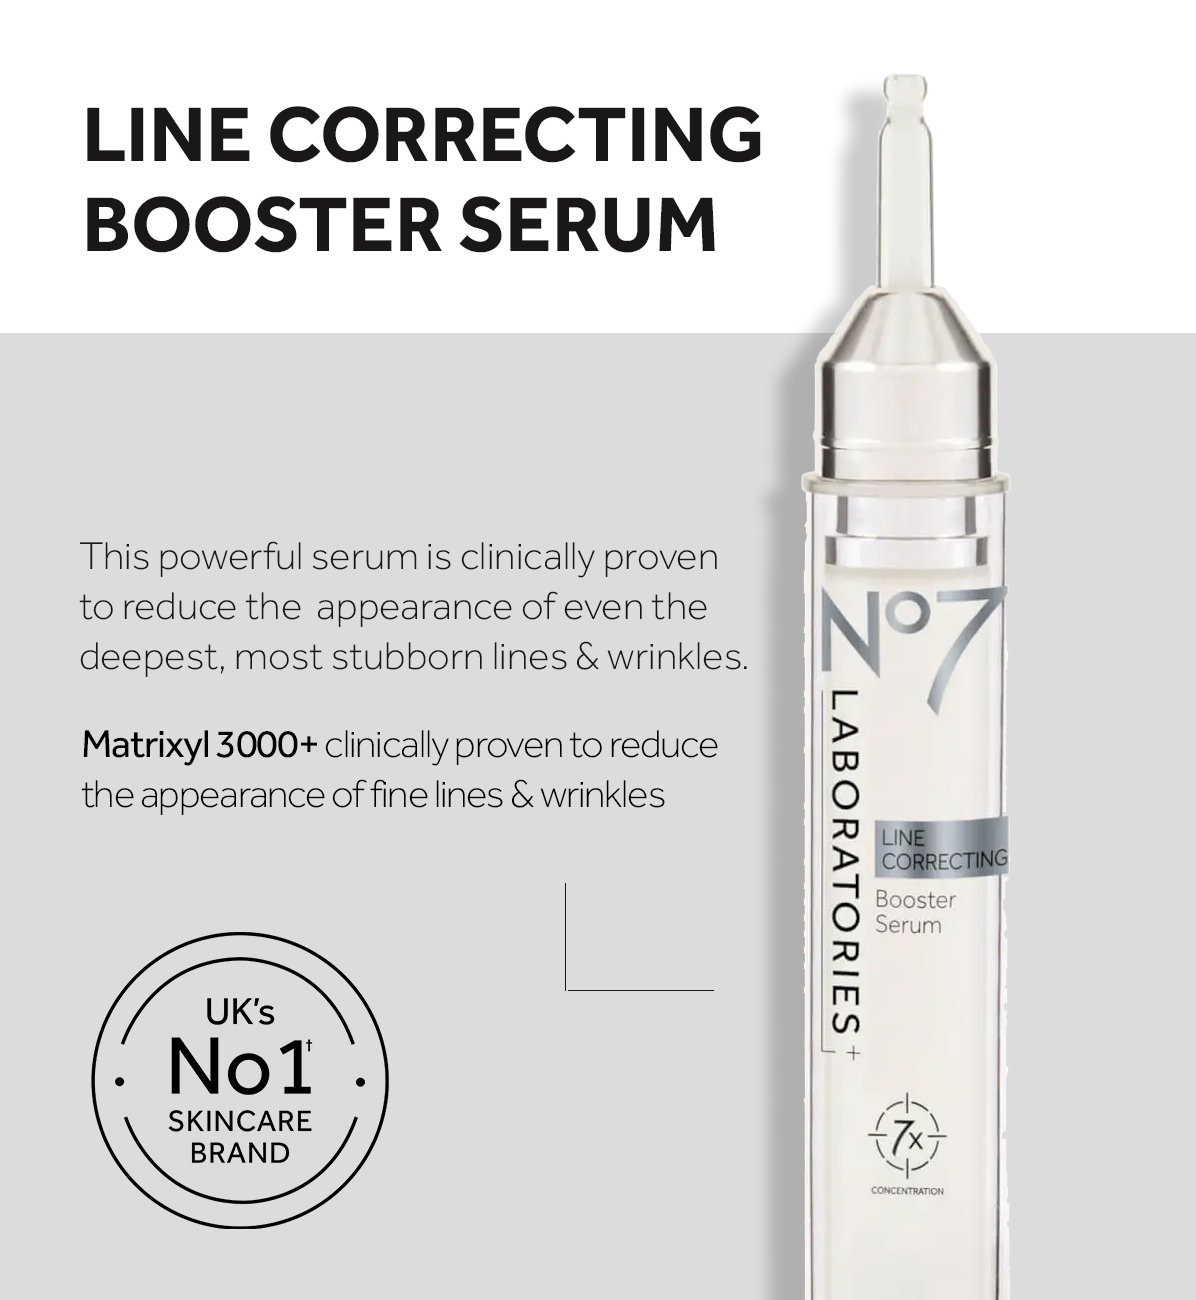 Line correcting booster serum image